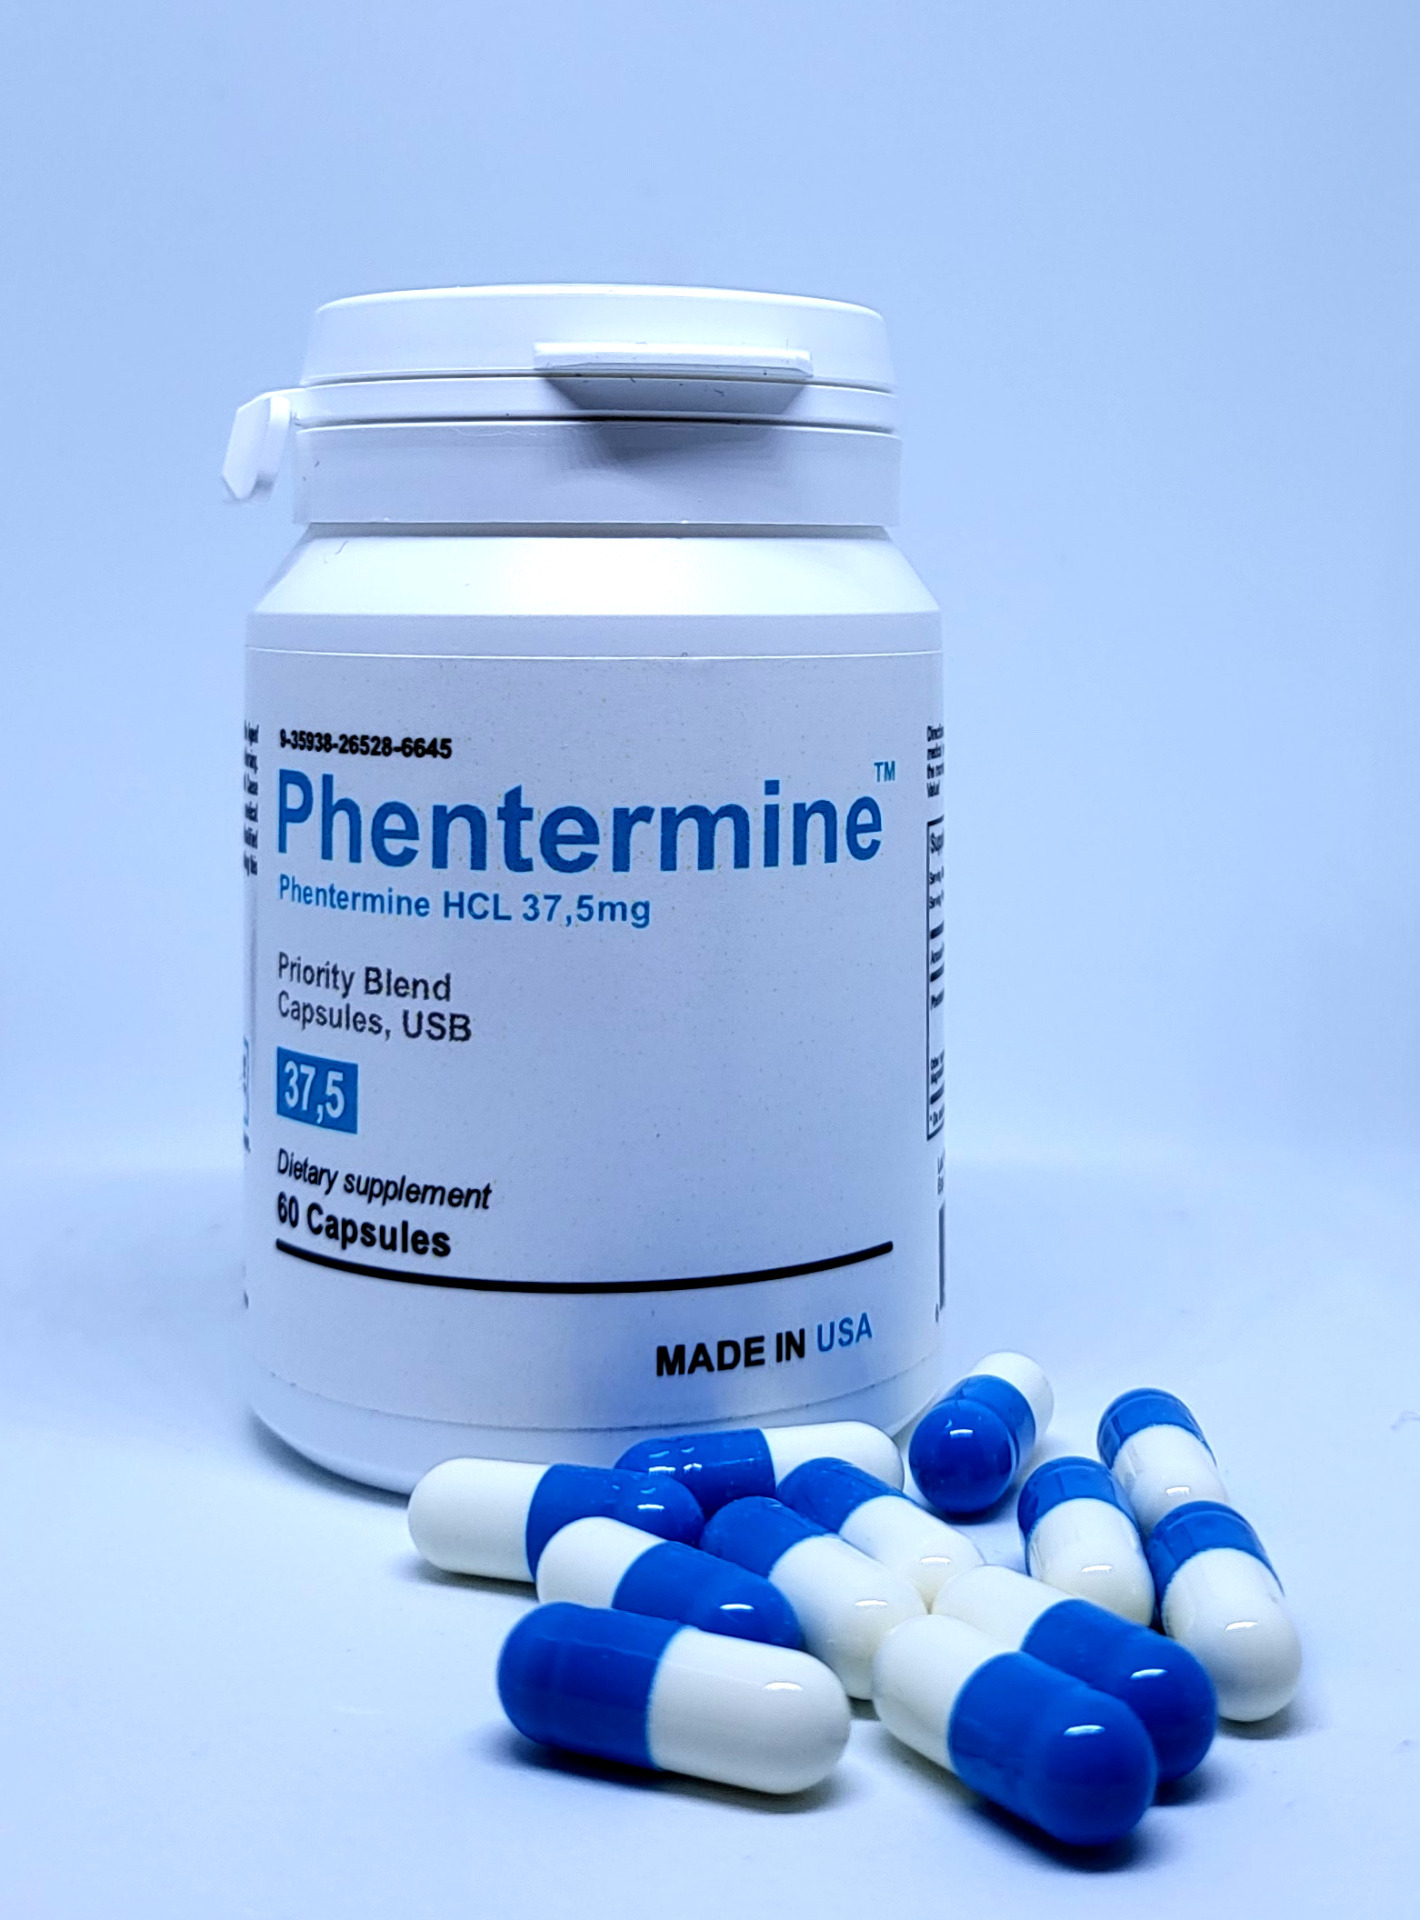 What is Phentermine